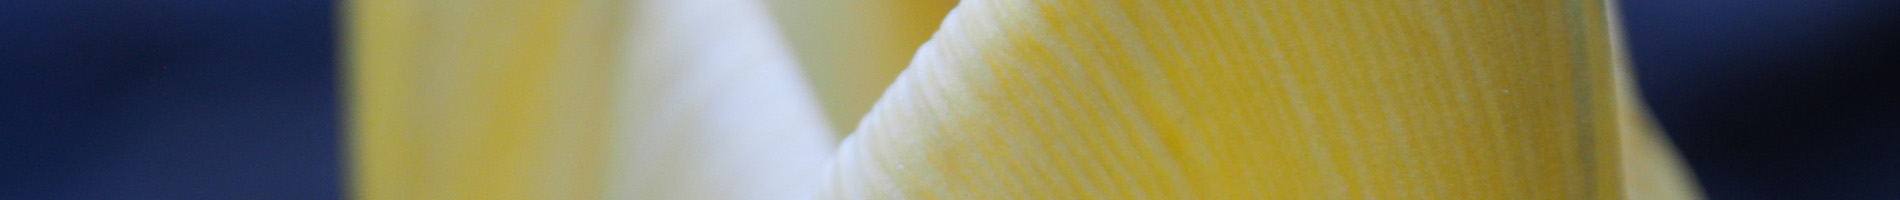 gele tulp in close up